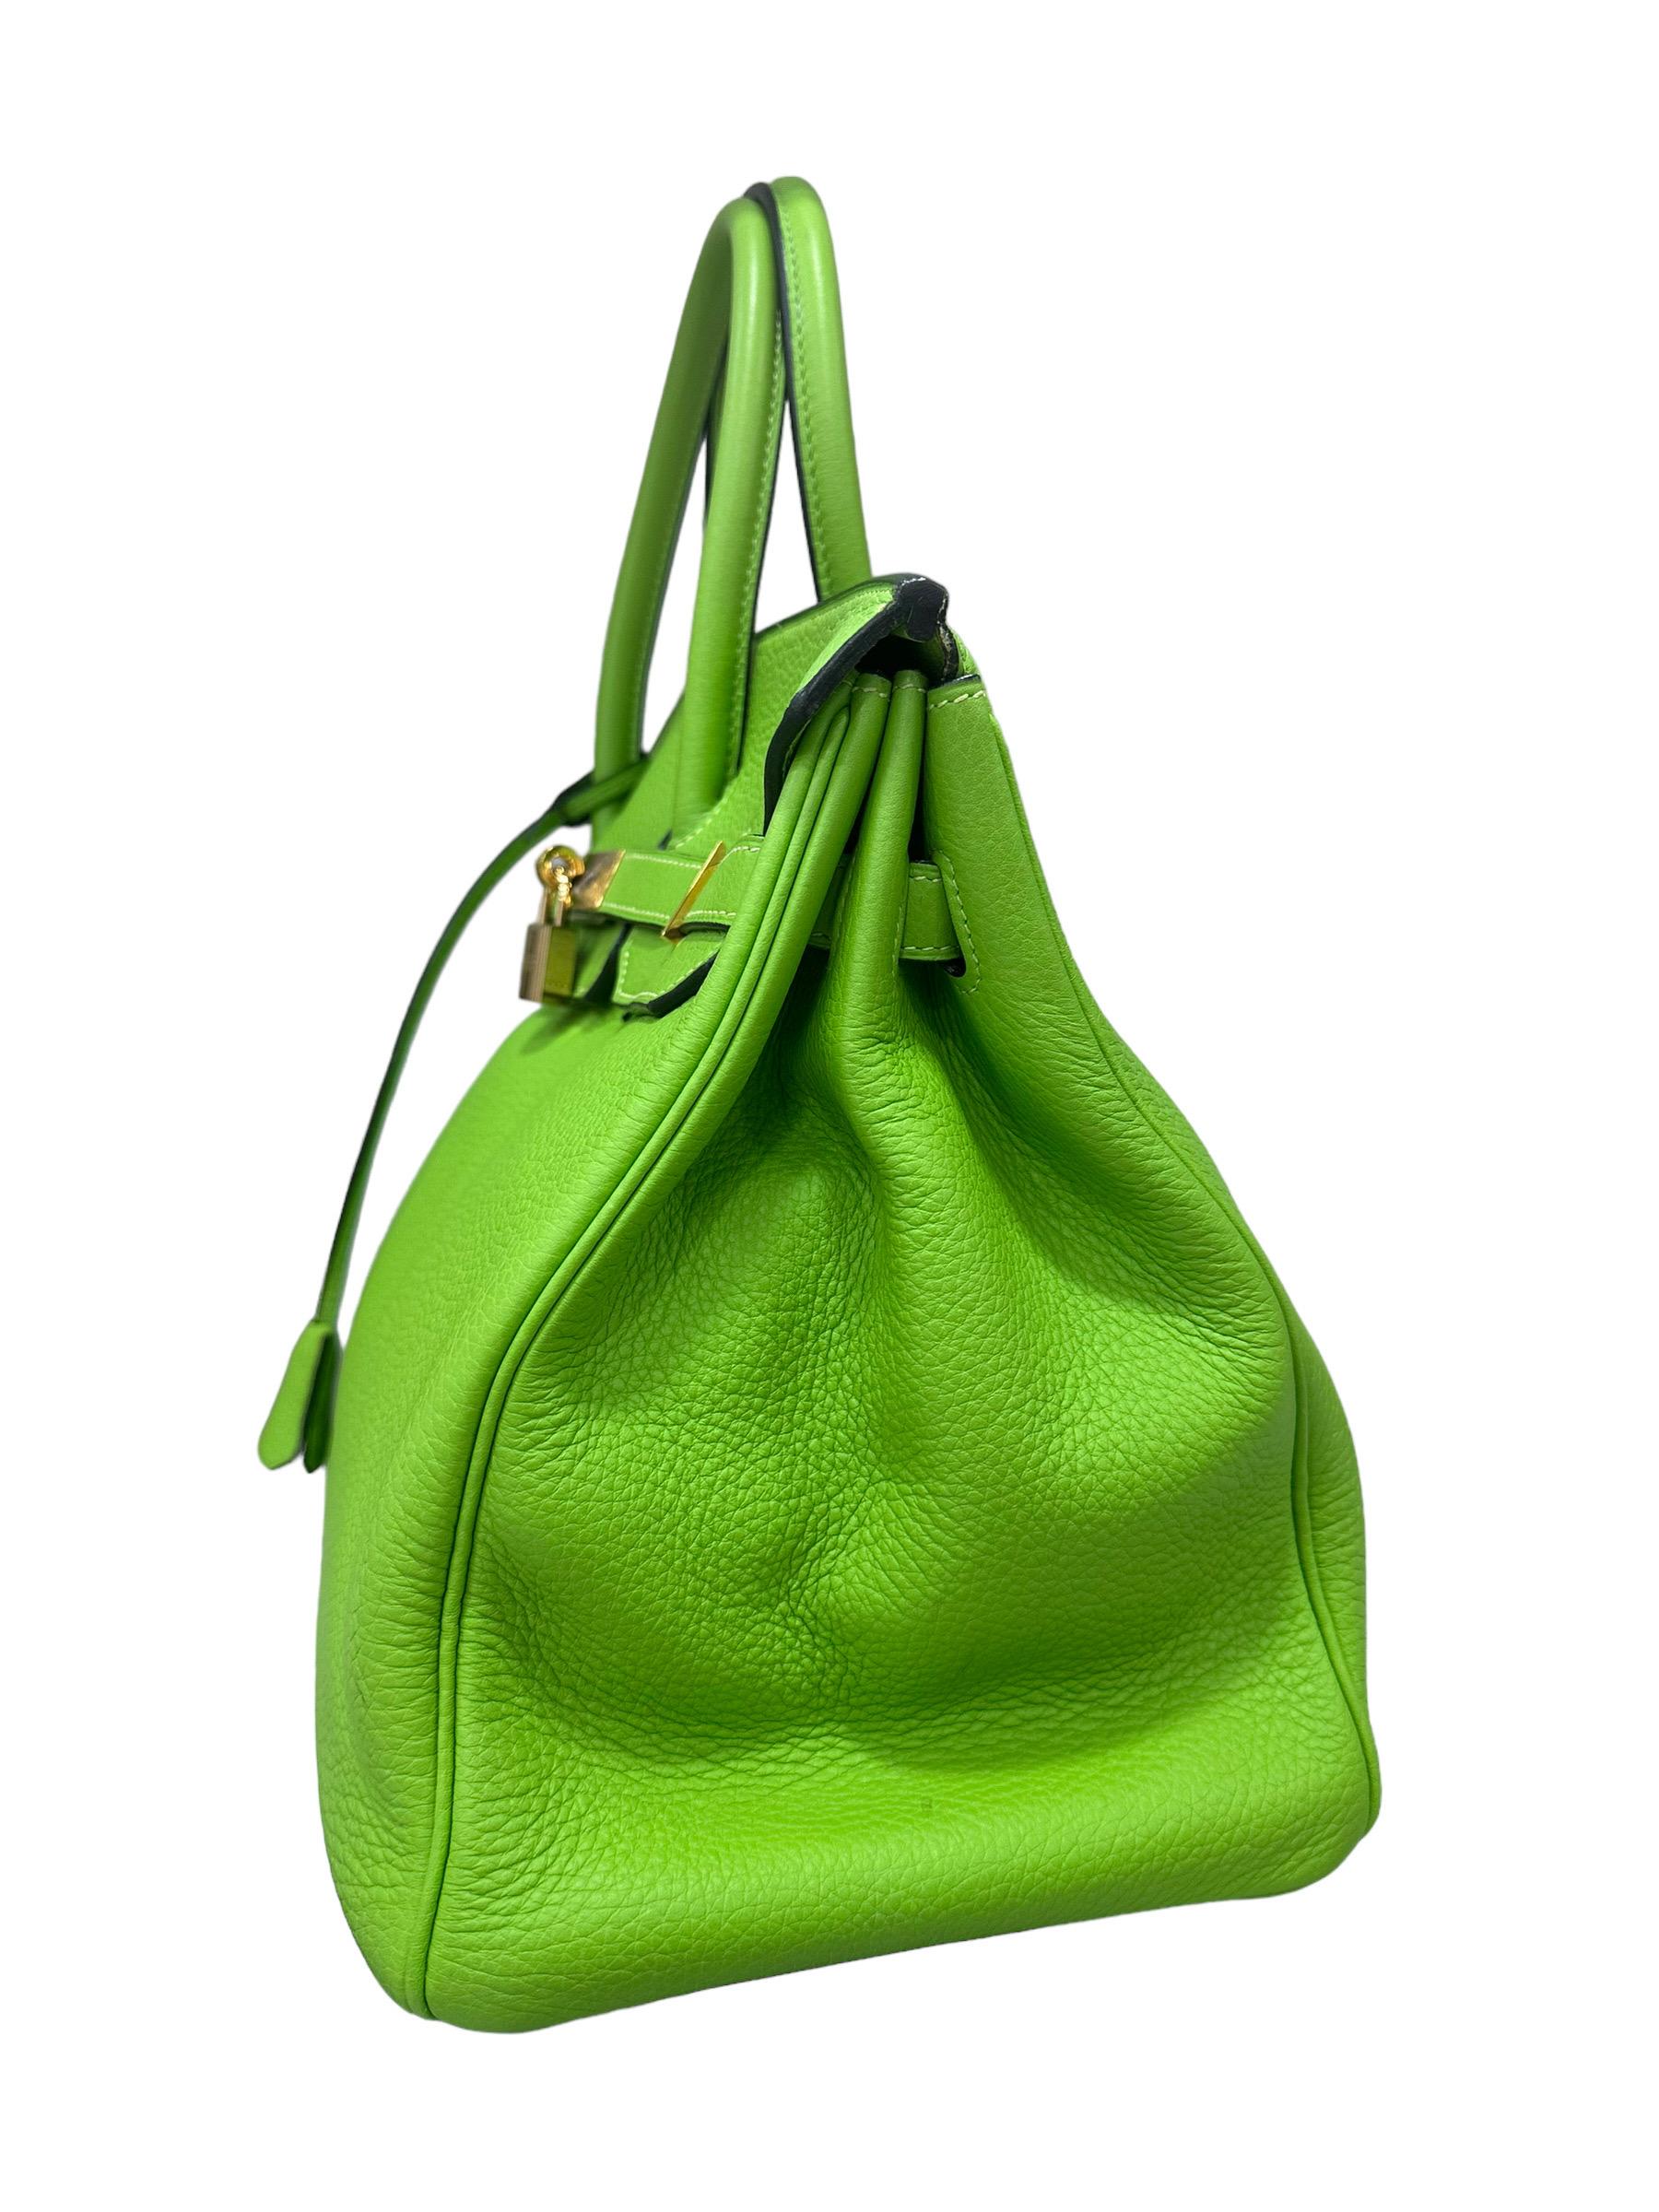 2004 Hermès Birkin 35 Clemence Leather Green Apple Top Handle Bag 1